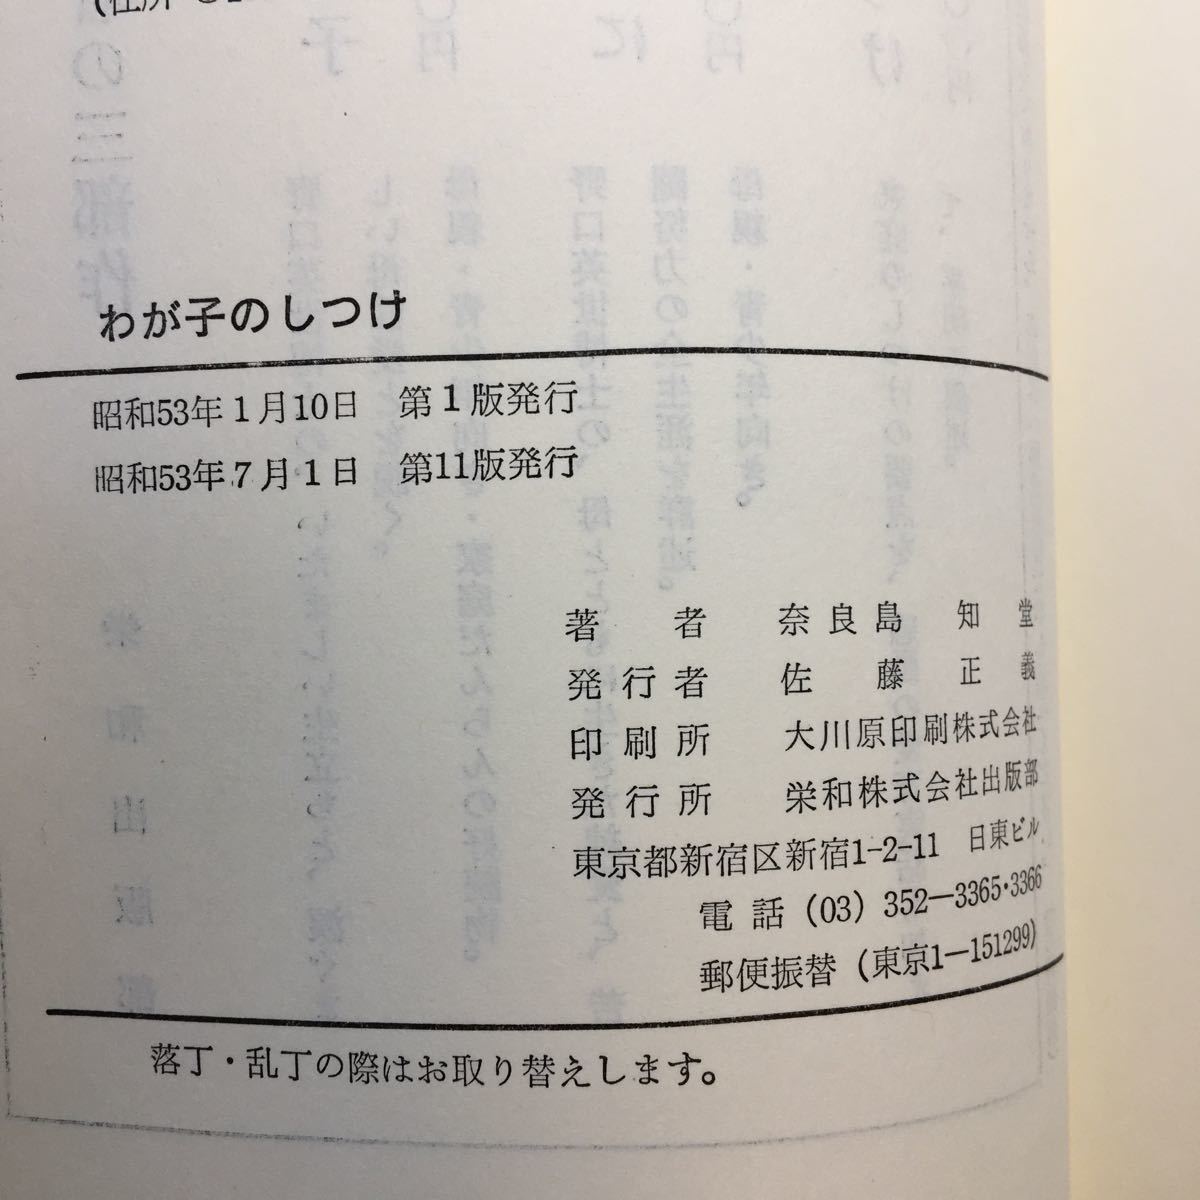 zaa-473♪わが子のしつけ 　奈良島知堂 (著) 栄和株式会社出版部　1978/7/1